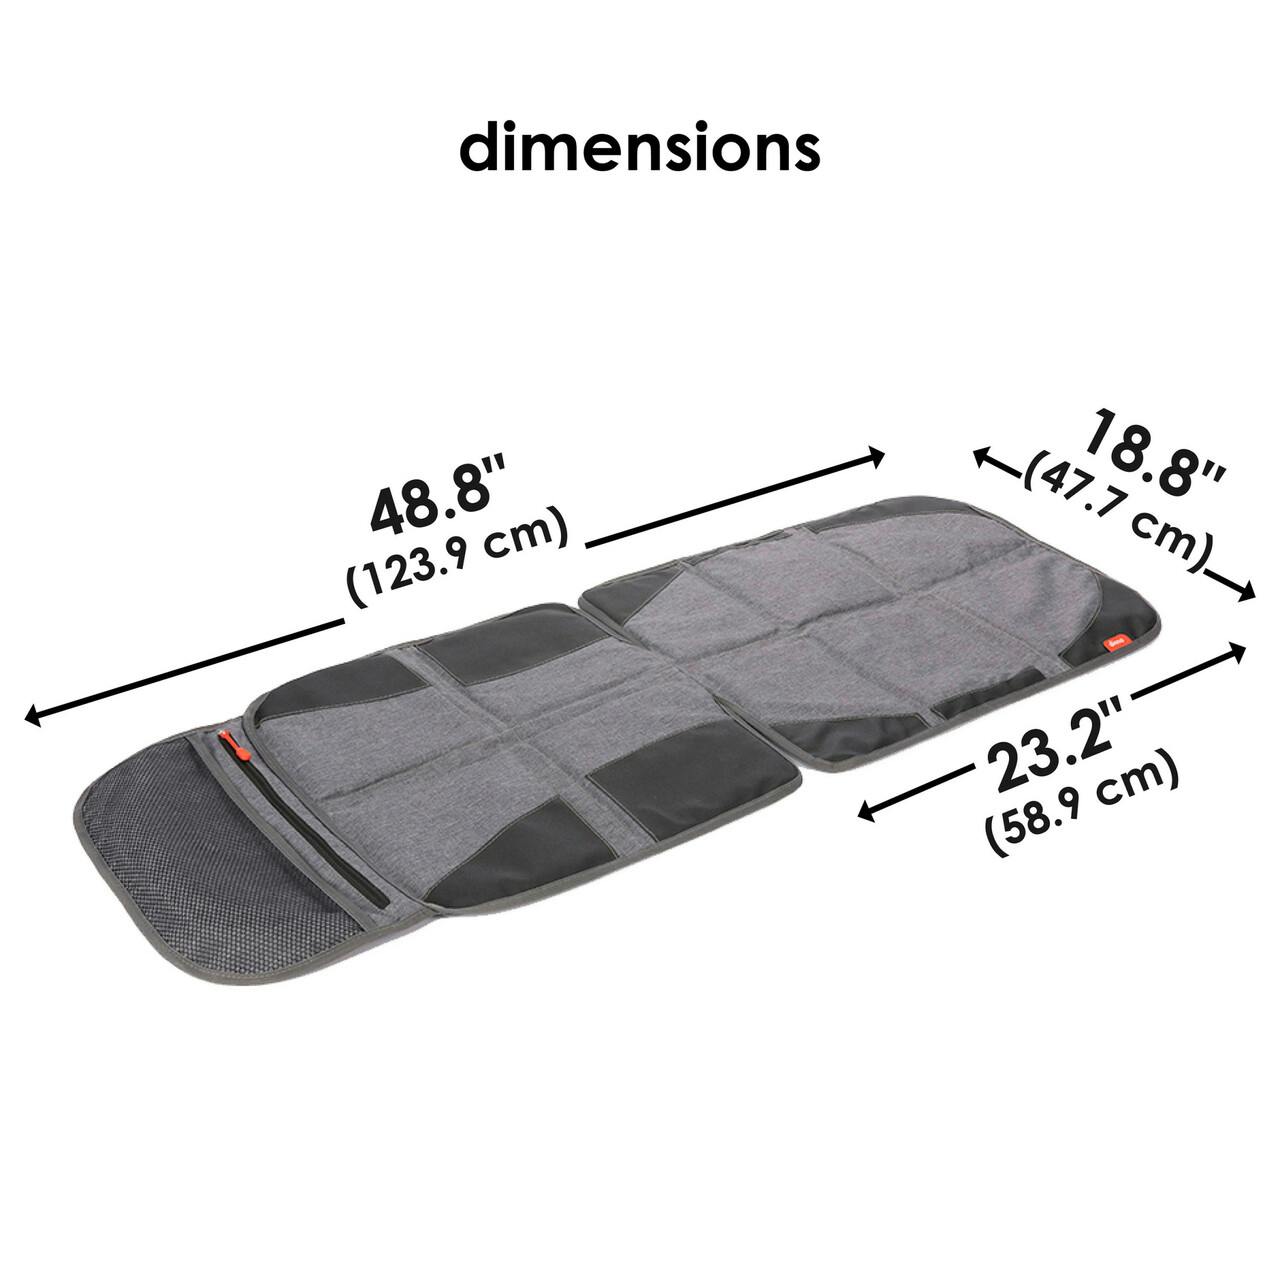 Diono Ultra Mat and Heat Sun Shield Car Seat Protector